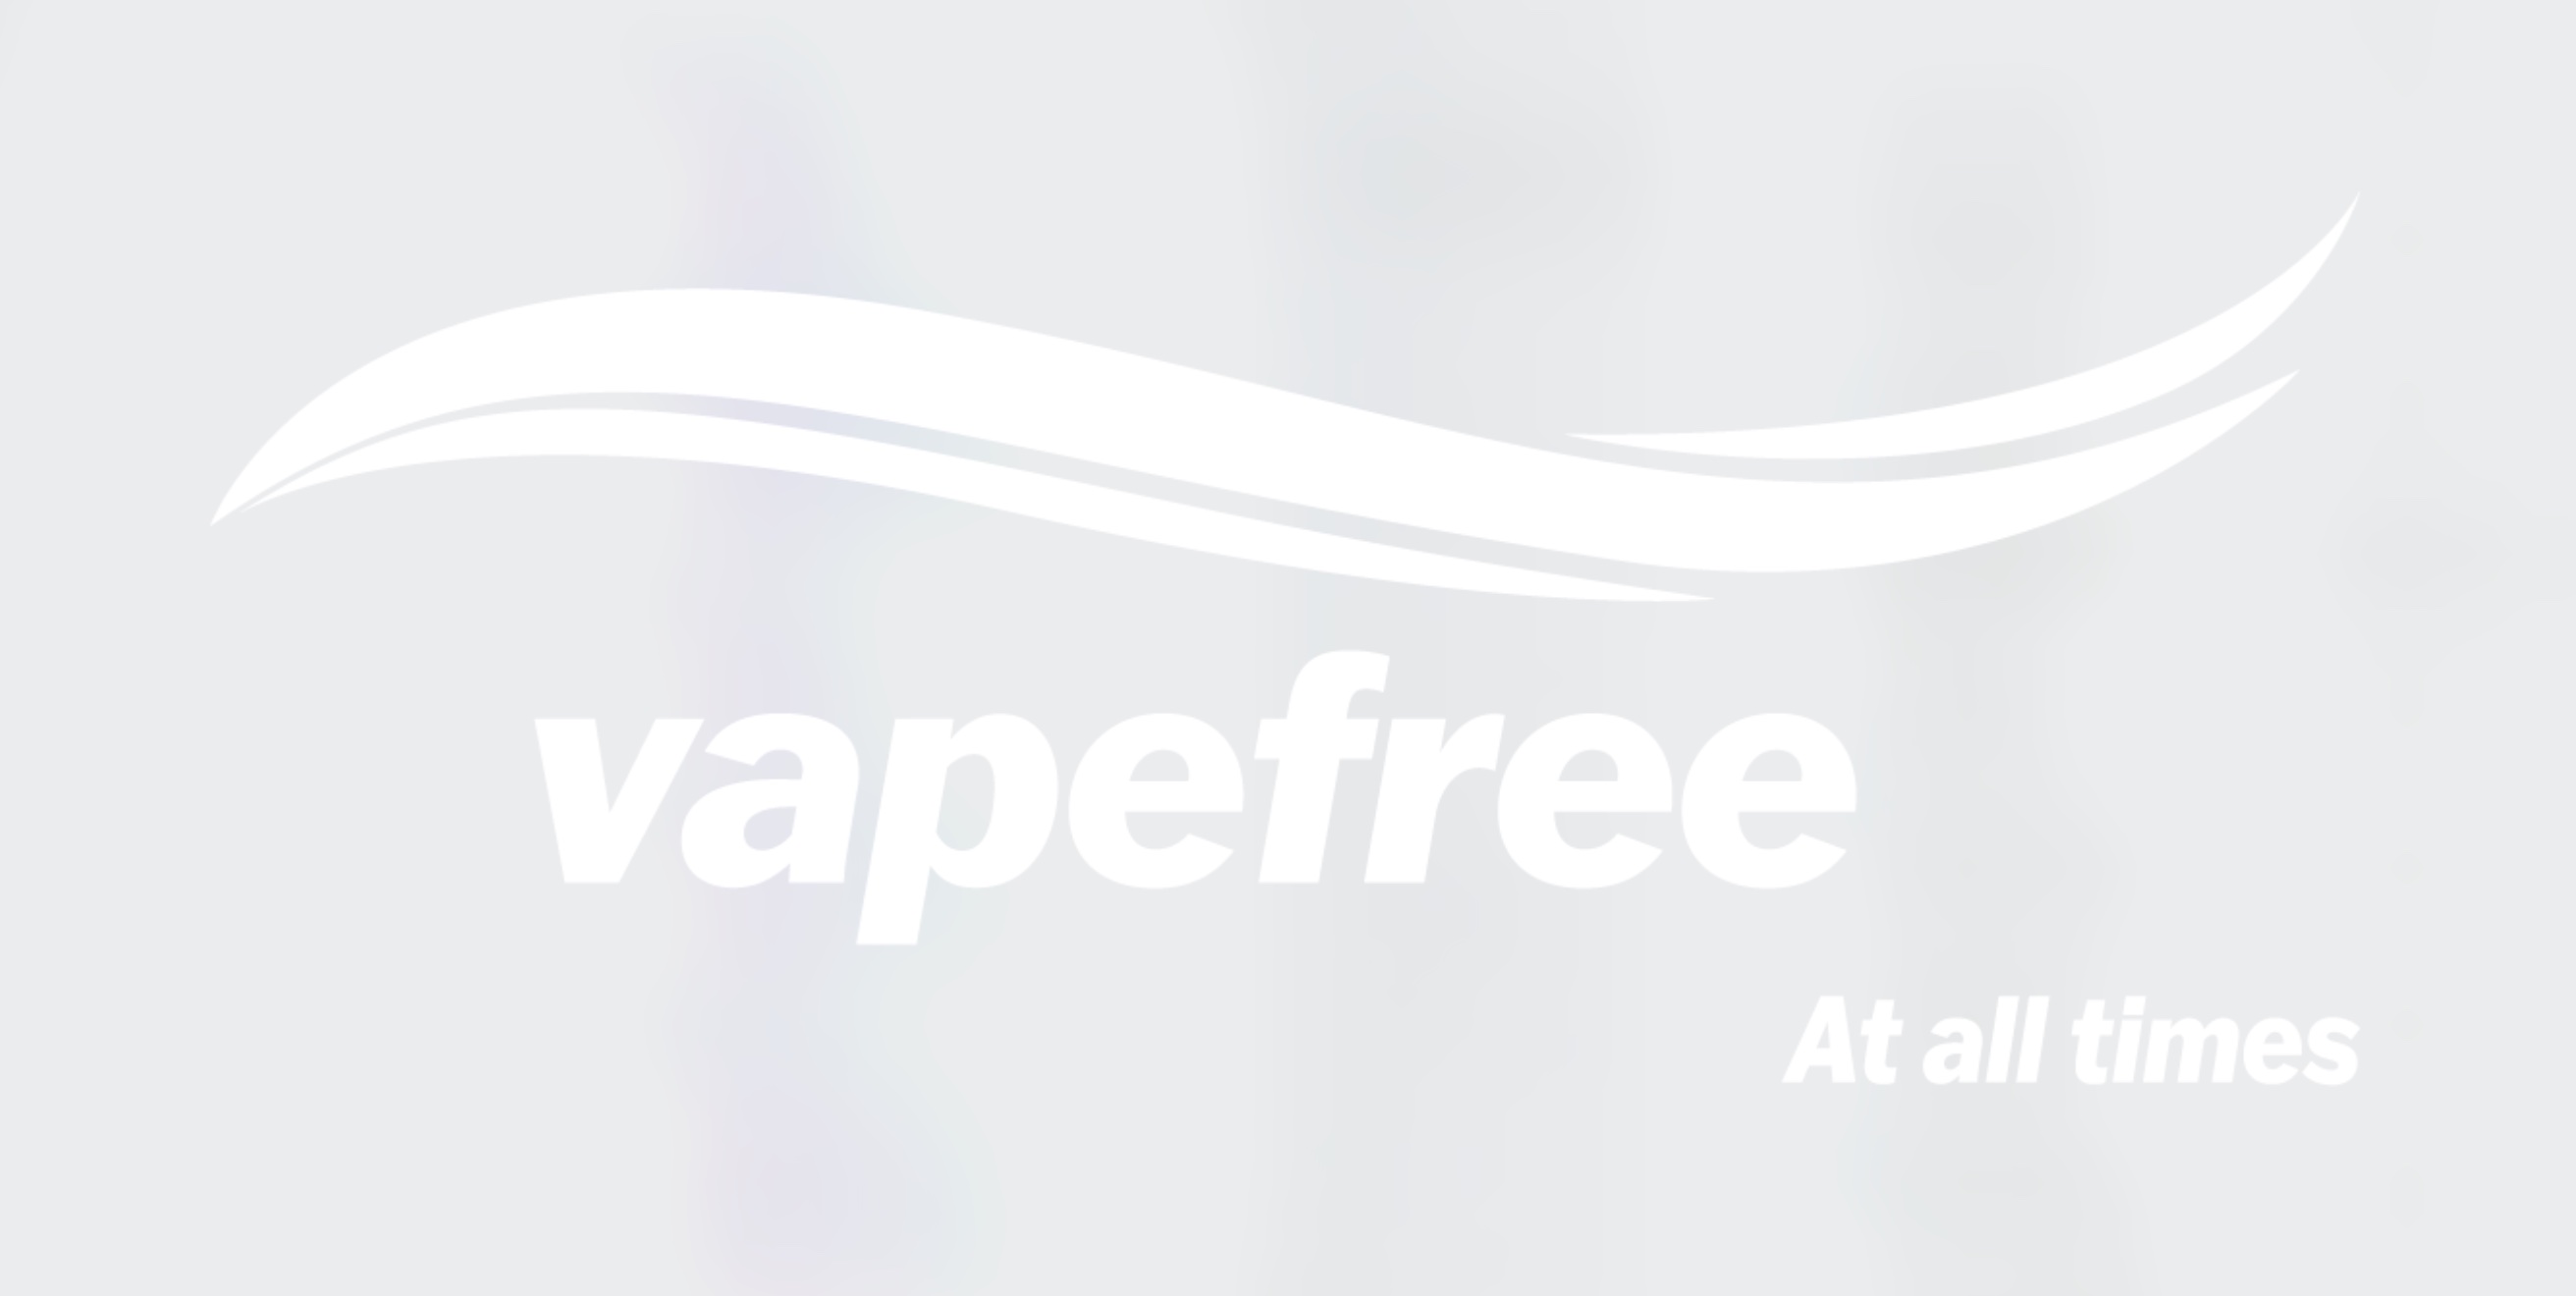 Vapefree at all times logo reverse